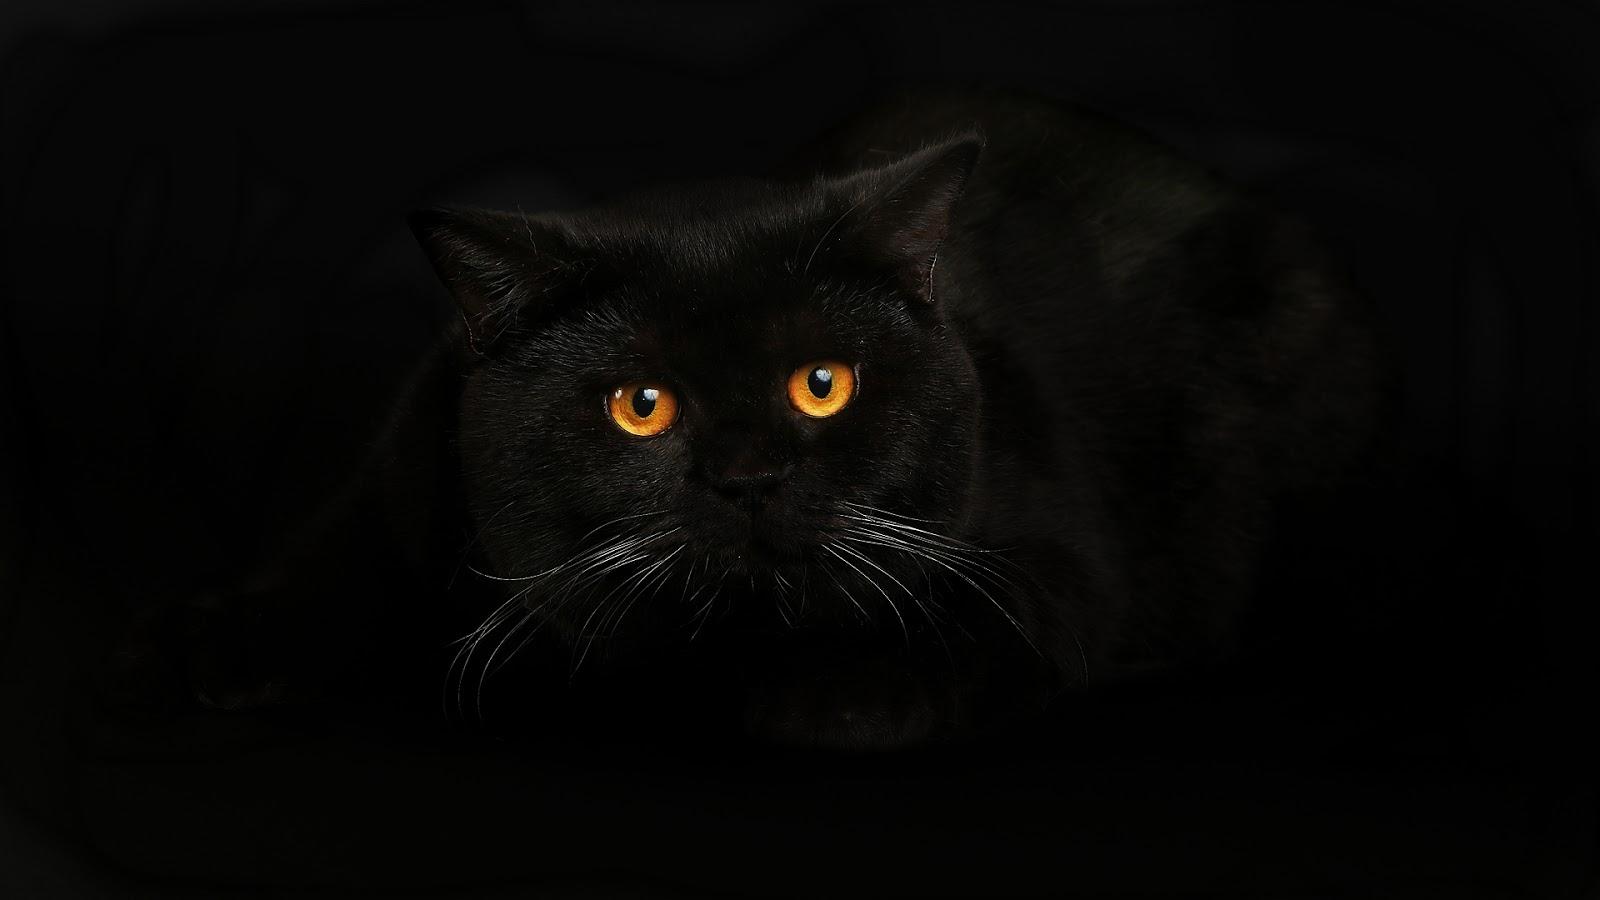 Black Cat Hd Wallpapers - Top Free Black Cat Hd Backgrounds